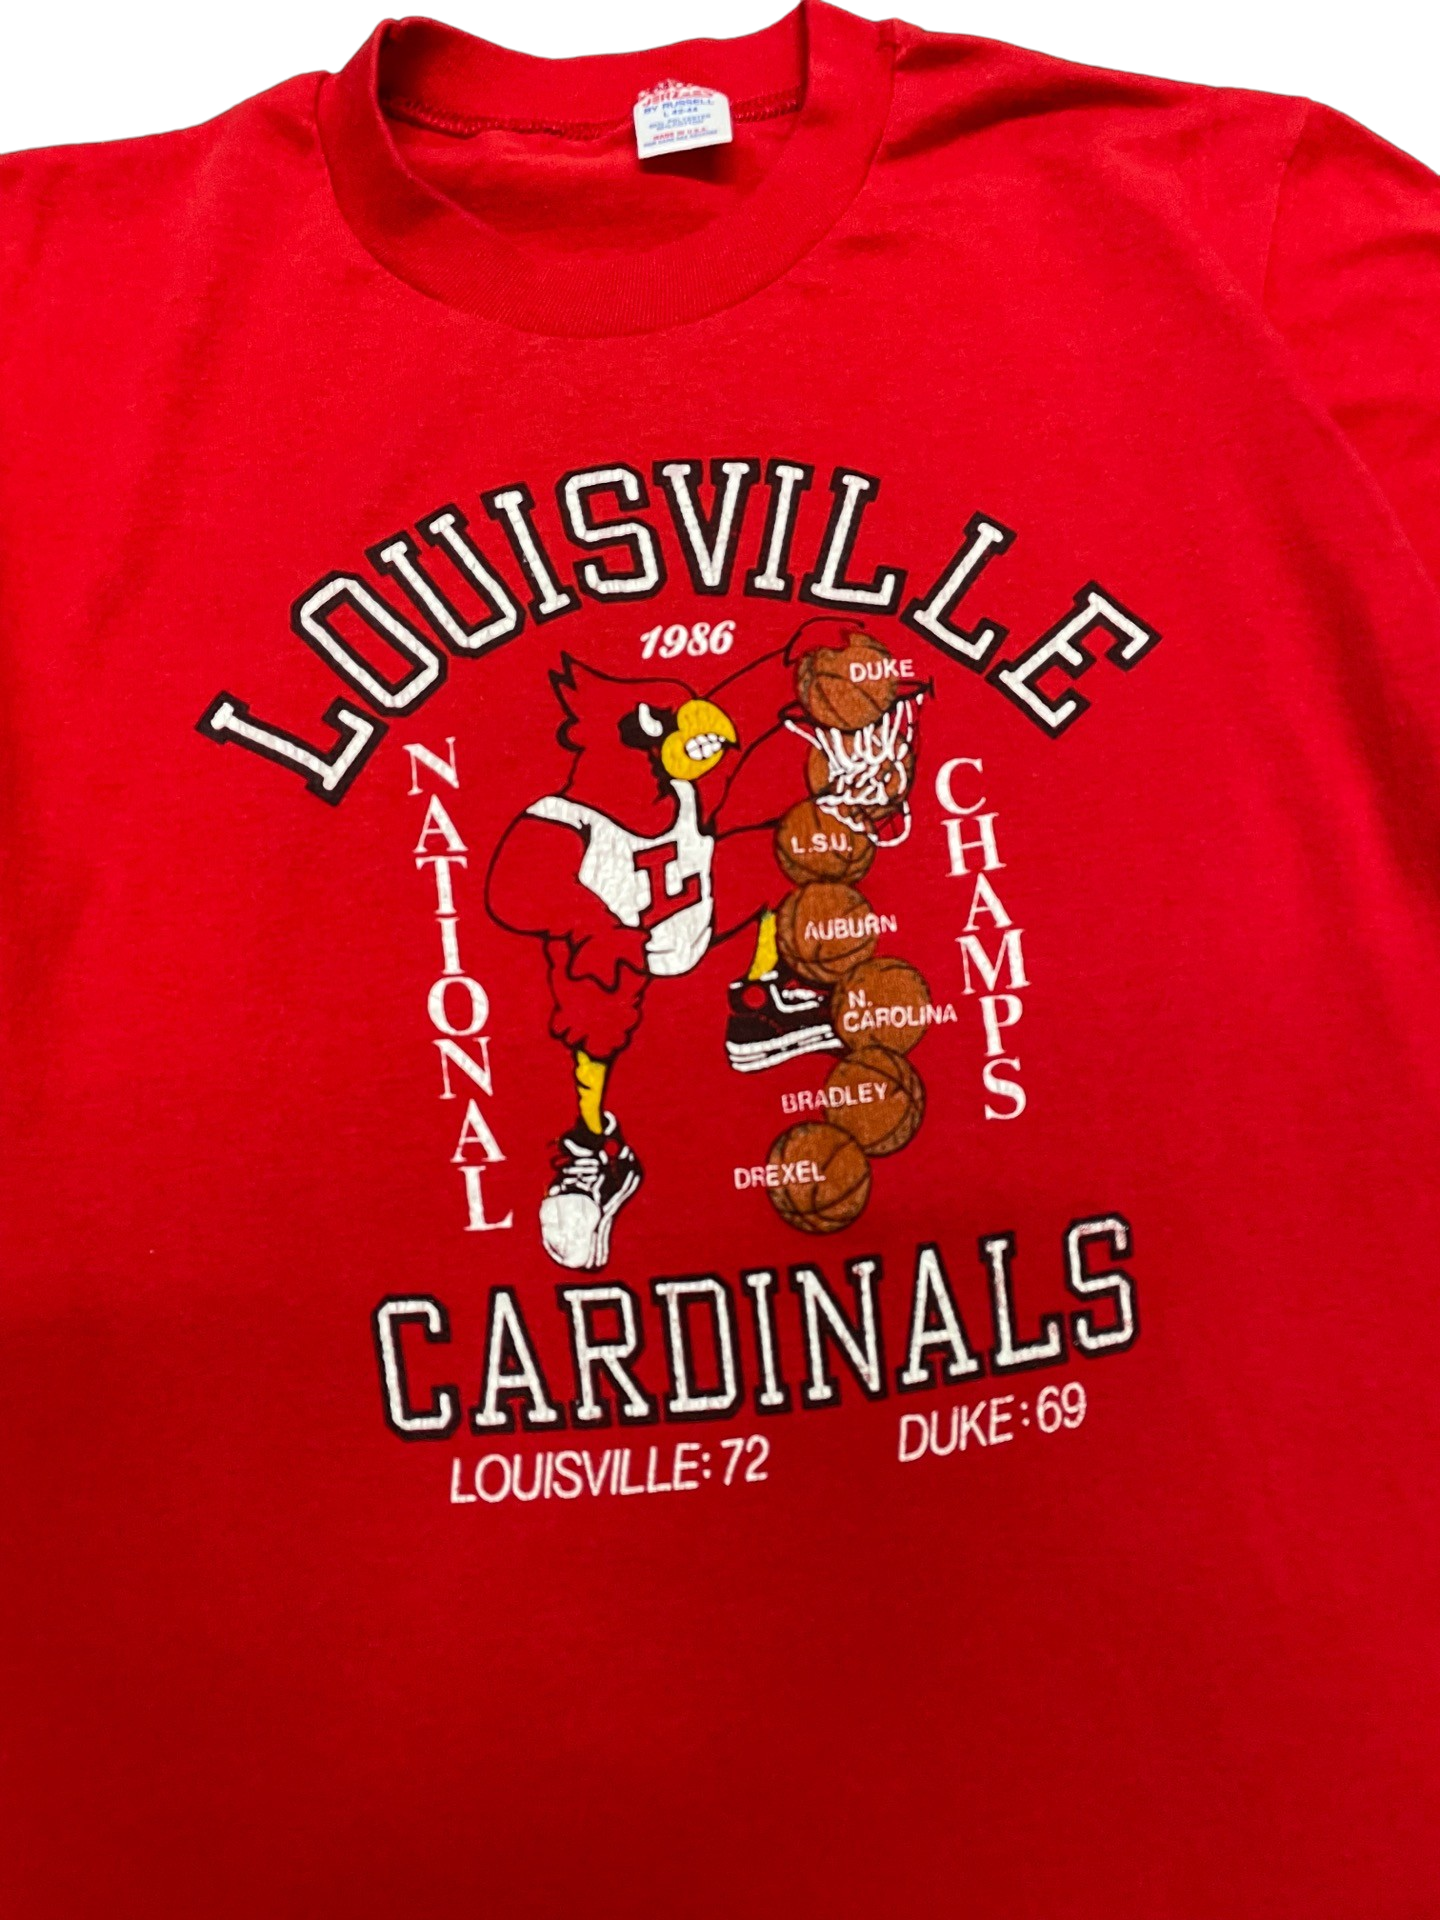 Vintage Louisville t-shirt